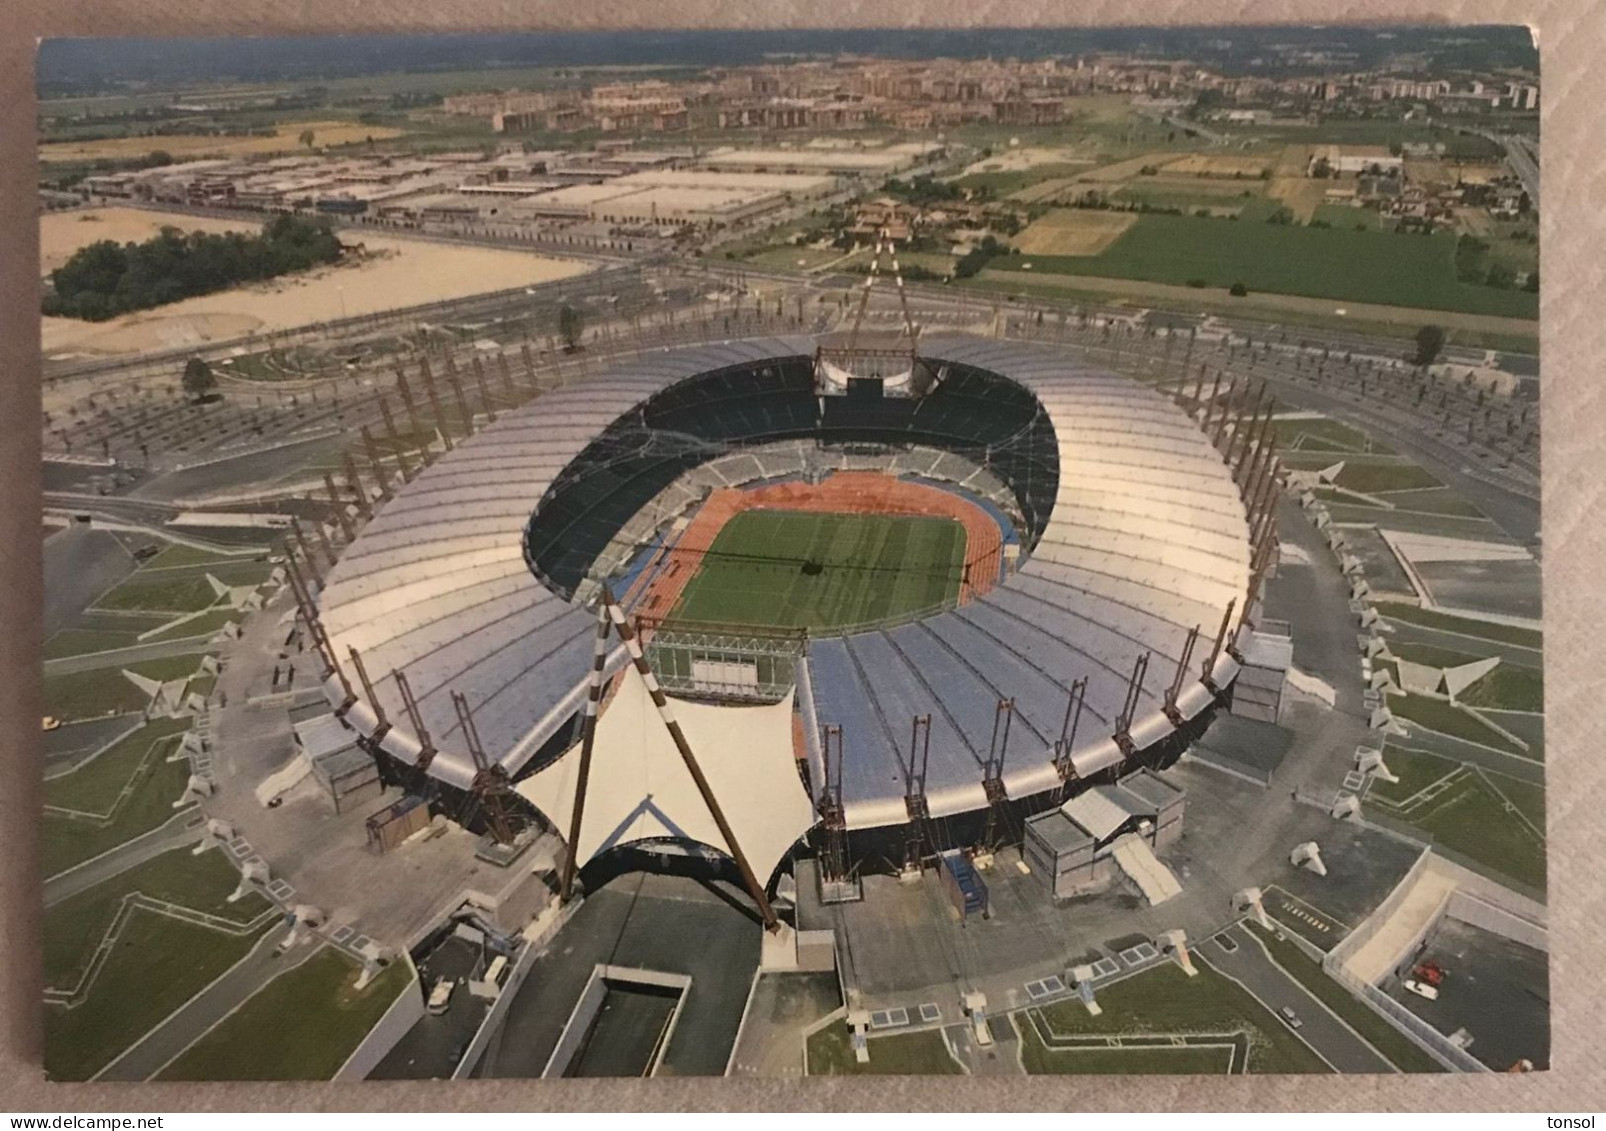 TORINO POSTCARD STADIUM "DELLE ALPI"  (STADIUM NOW DESTROYED) -Italy - Stadiums & Sporting Infrastructures